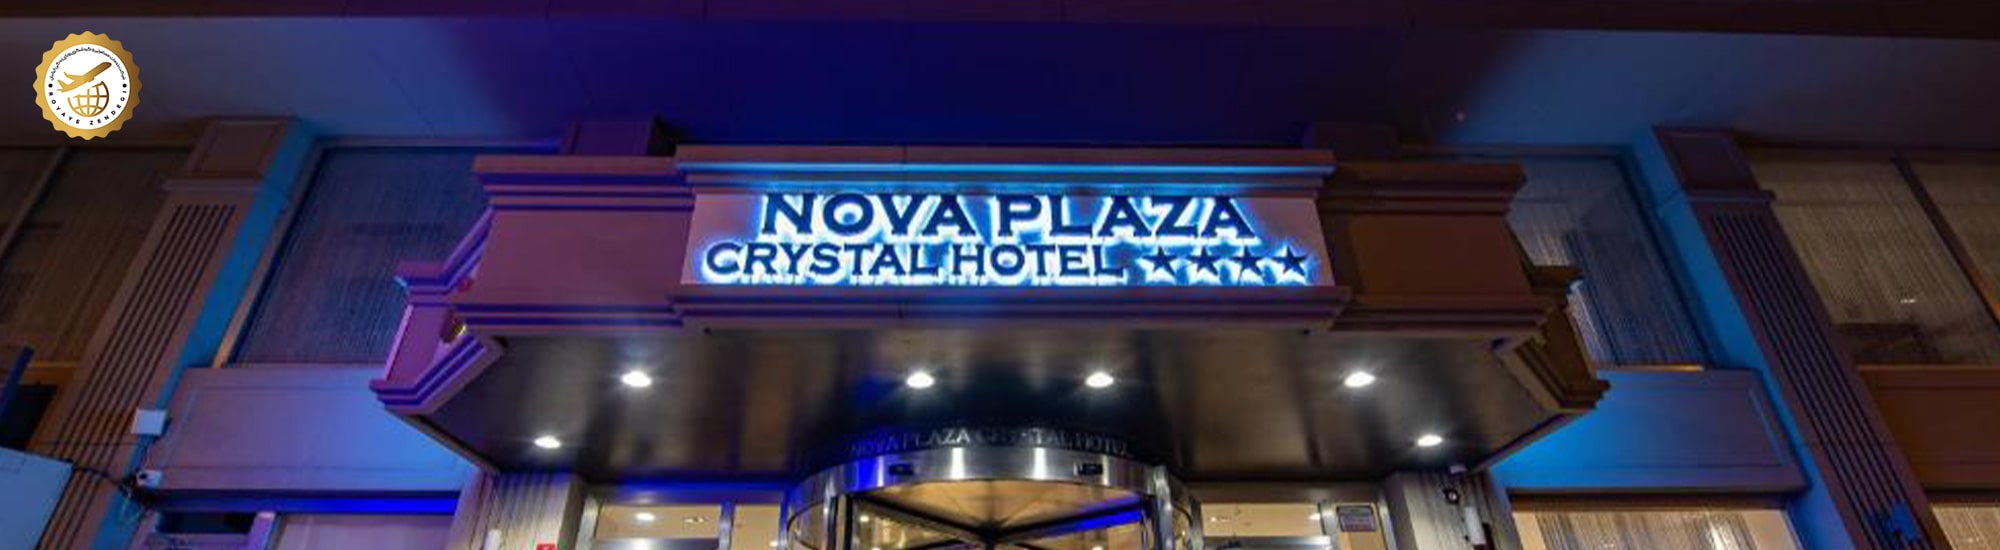 nova plaza crystal